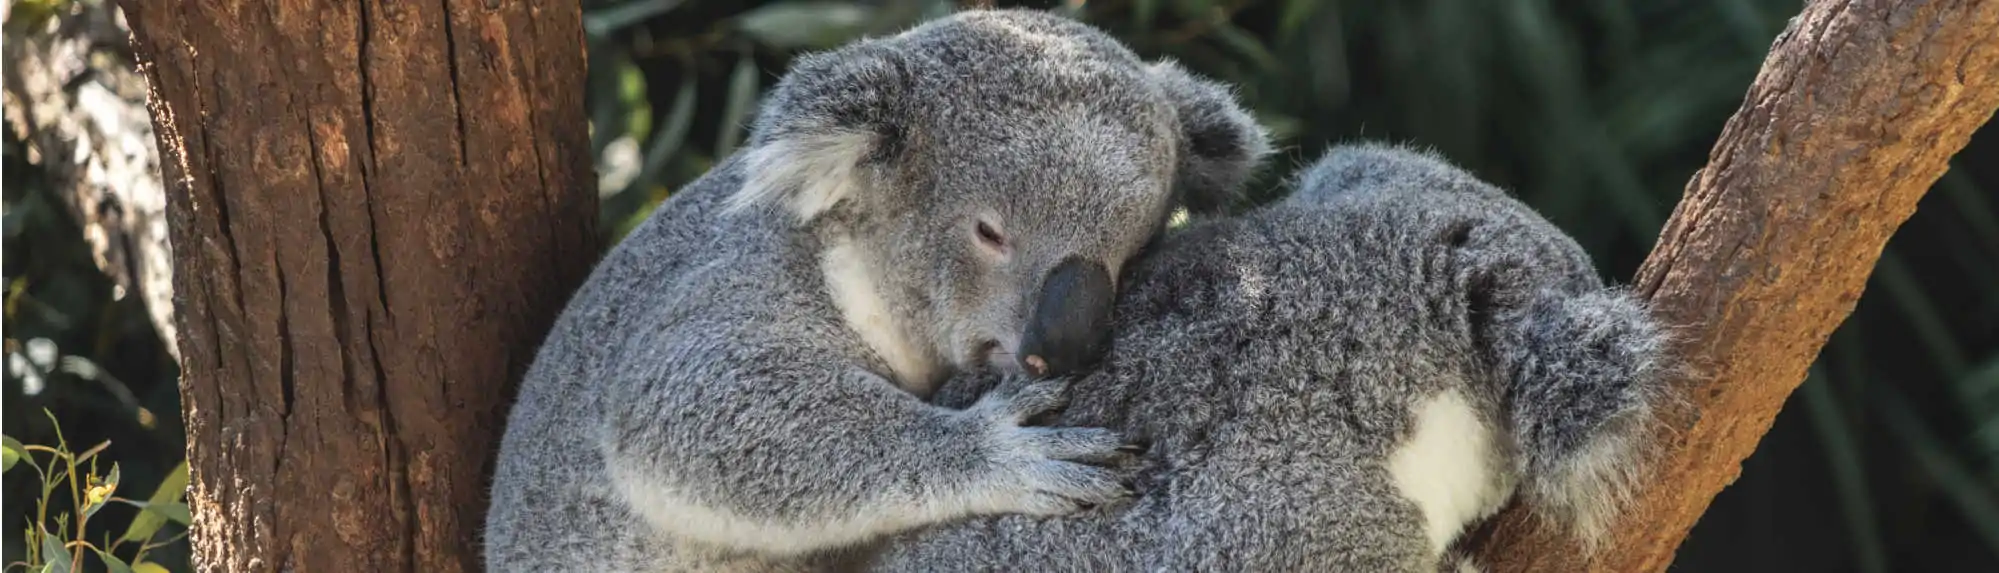 Can You Hold Koalas in Australia?